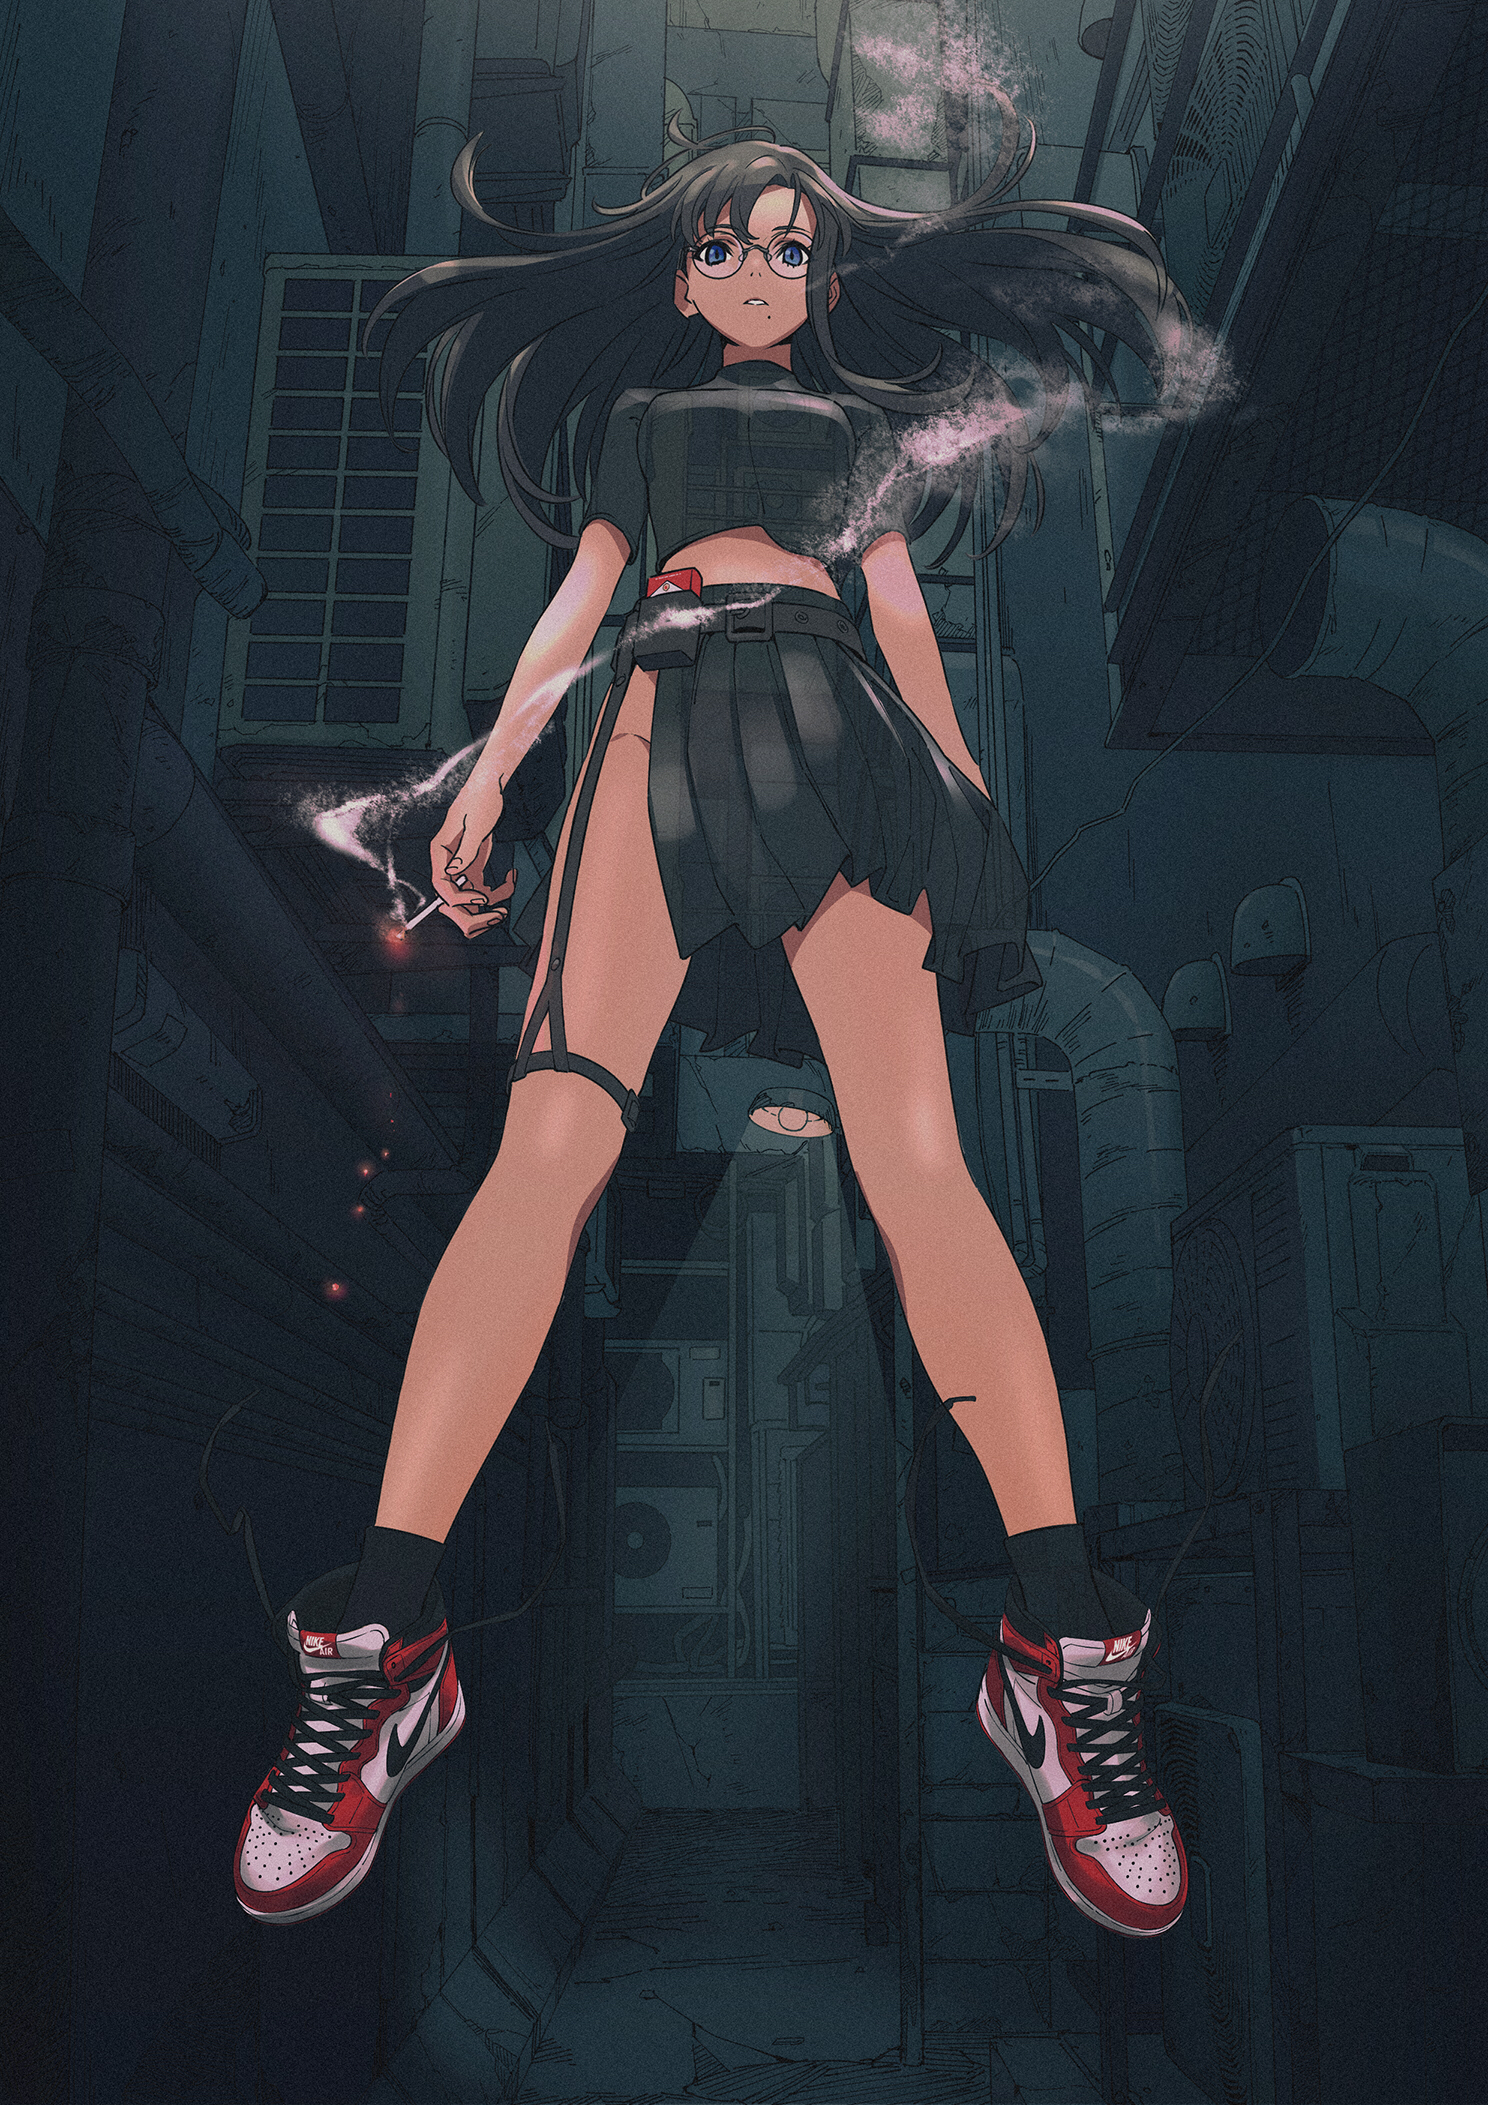 Anime 1488x2105 portrait display 2D anime anime girls digital art artwork miniskirt spread legs smoking black hair blue eyes glasses alleyway Tarou2